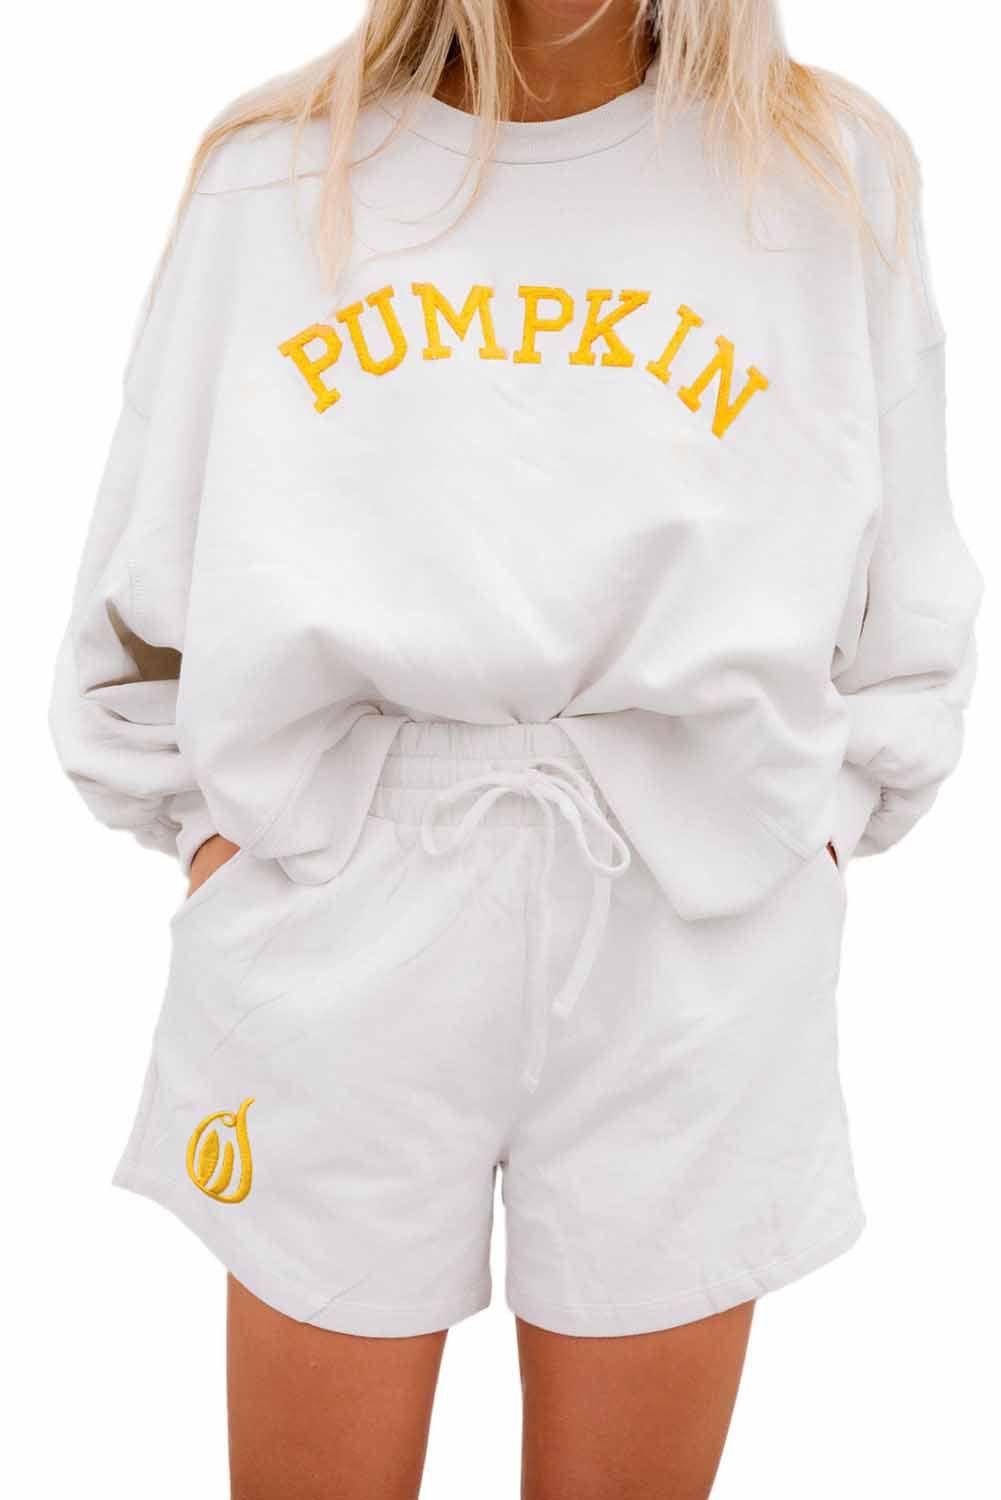 PUMPKIN Flocking Graphic Pullover Sweatshirt and Shorts Set - L & M Kee, LLC